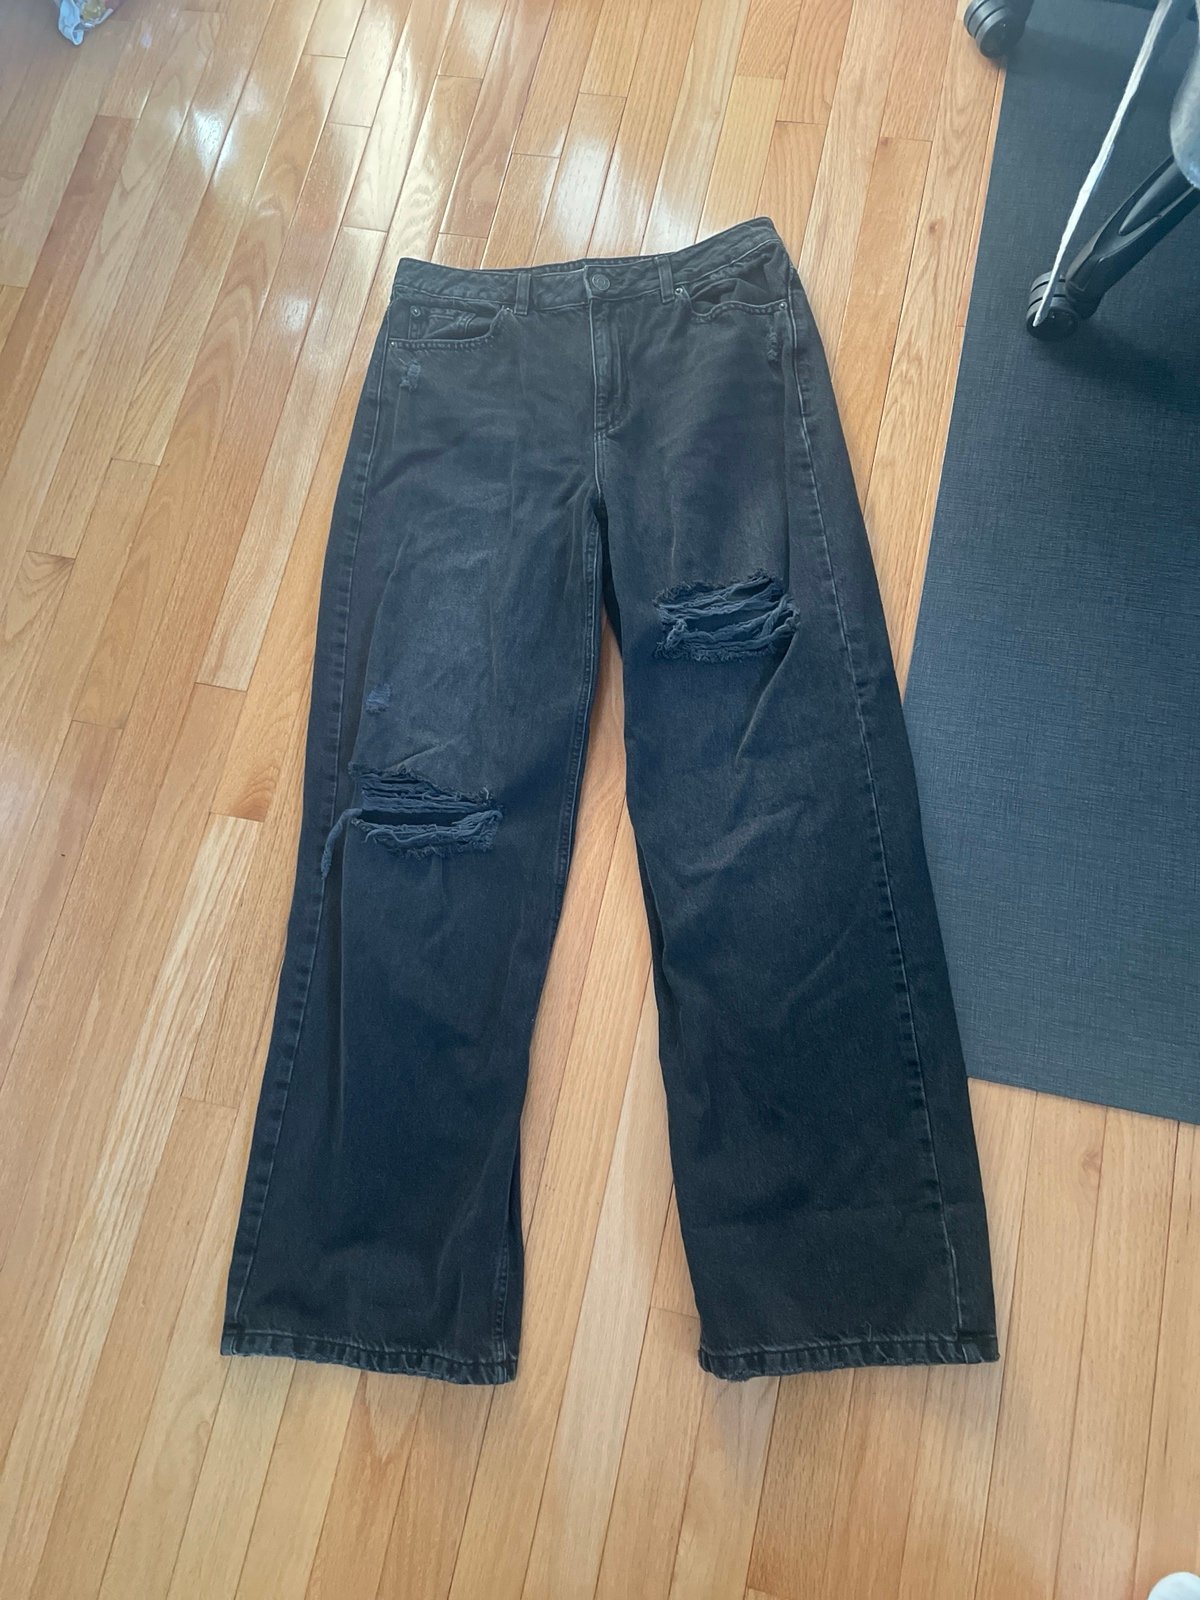 Latest  Garage Black Denim jeans Wide Leg size 11/30 in